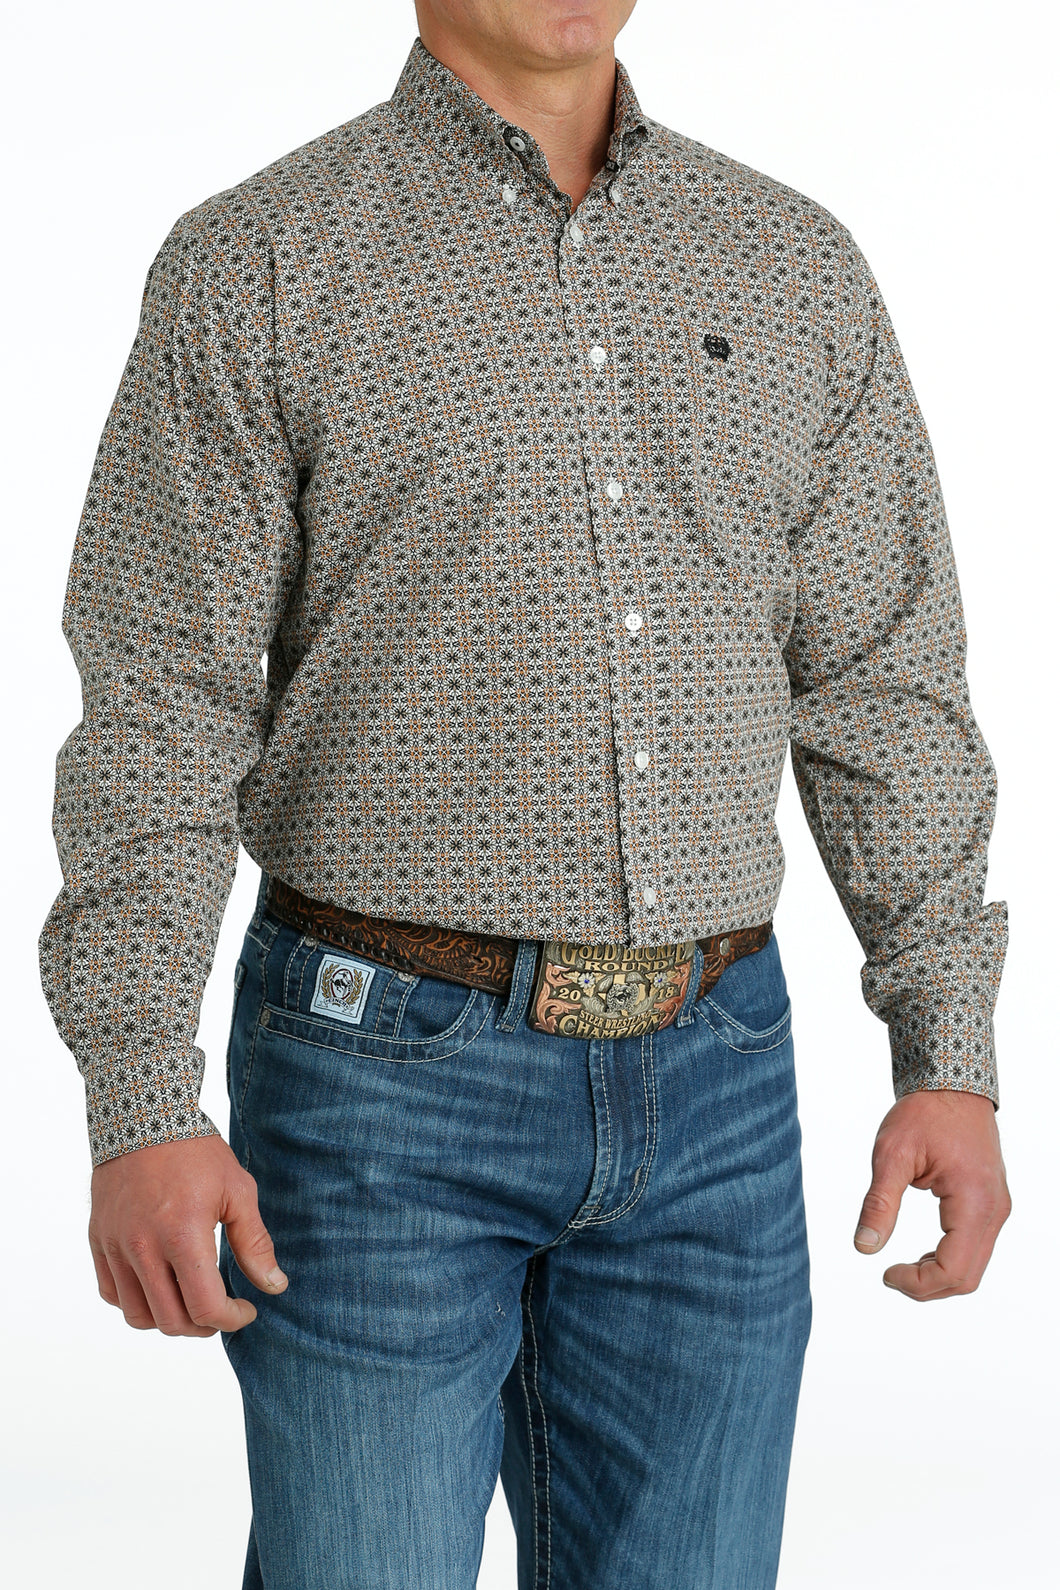 Pard's western Shop Cinch White/Gold Geometric Print Button-Down Shirt for Men